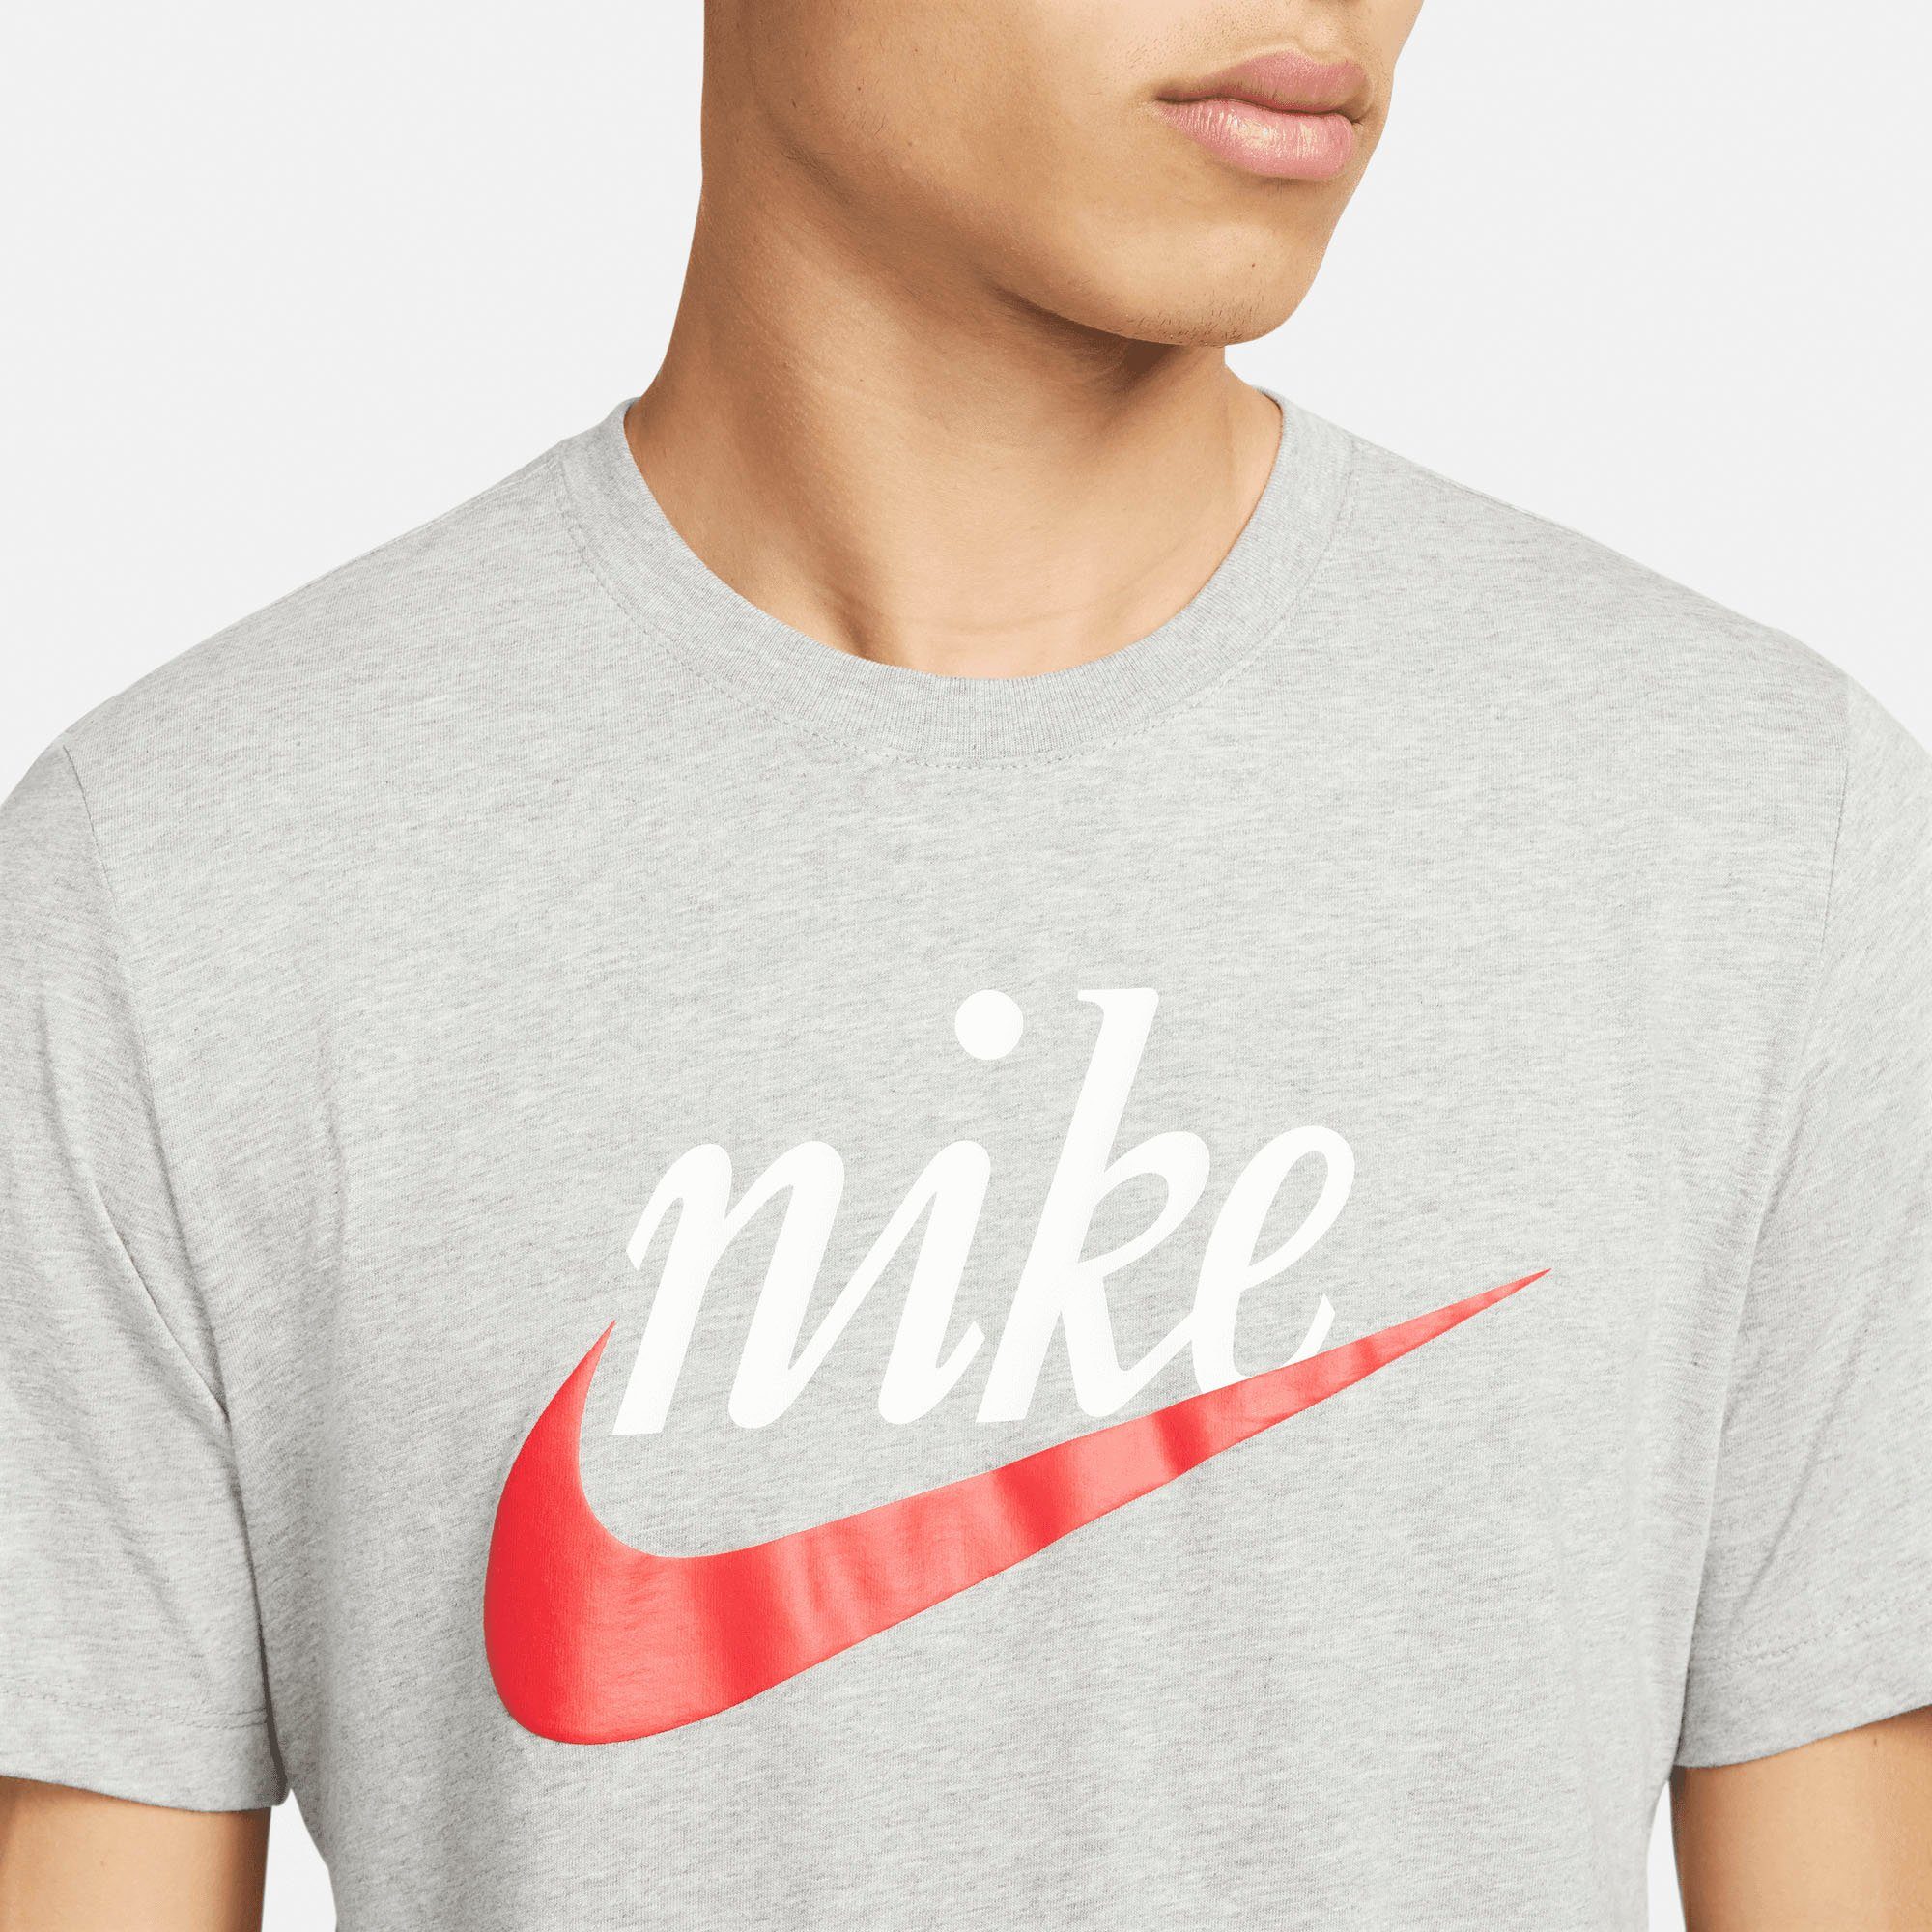 Nike Sportswear GREY HEATHER Men's T-Shirt T-Shirt DK